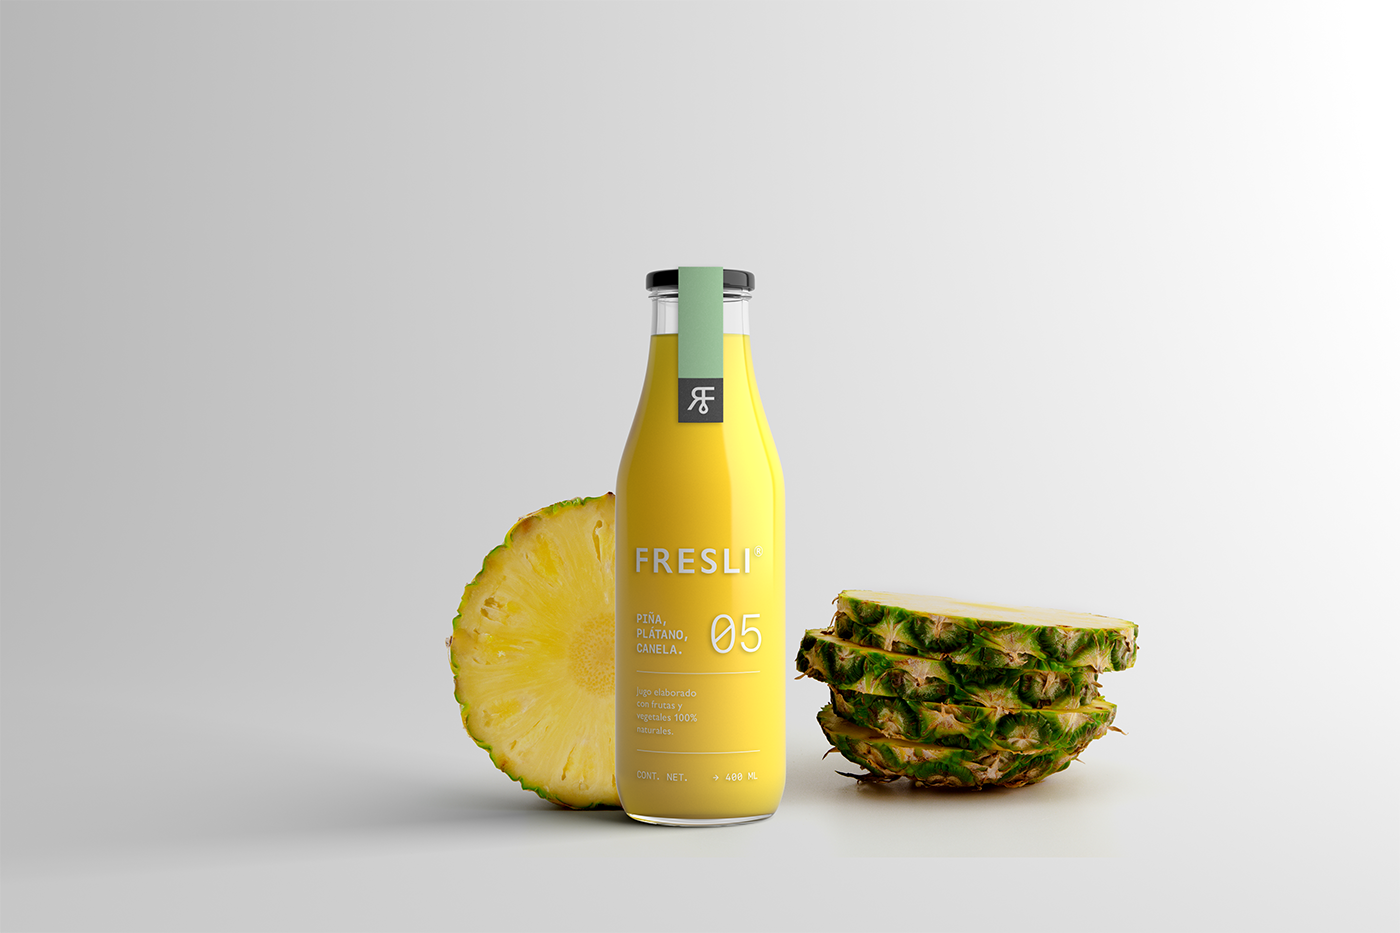 Fresli天然果汁包装设计